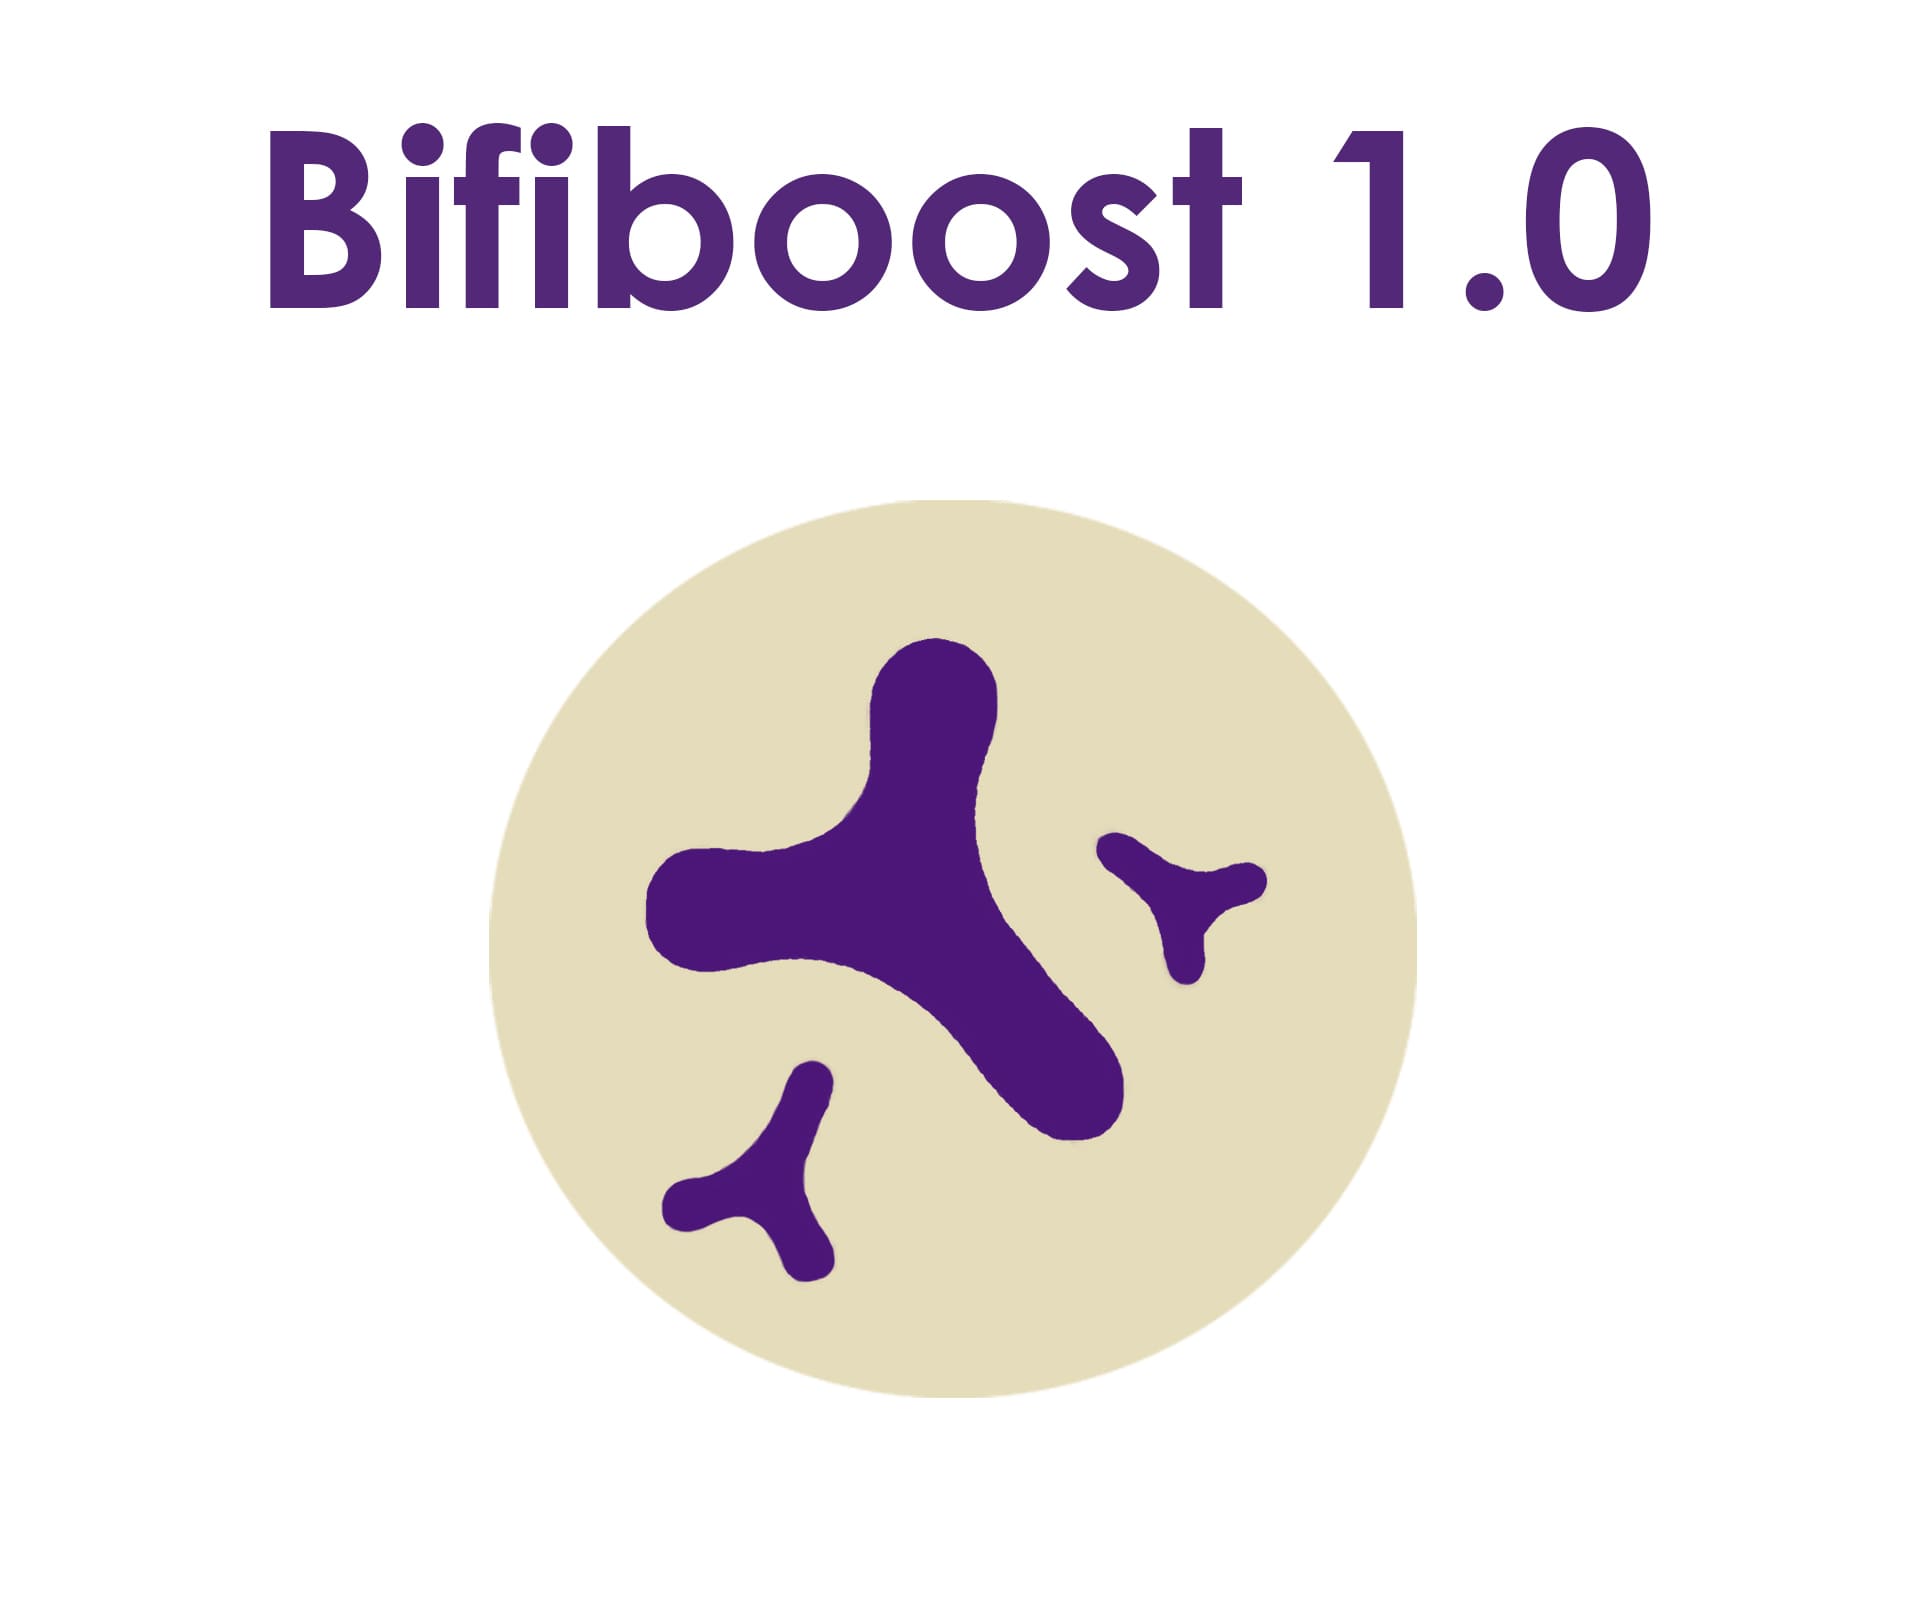 Bifiboost 1.0 Articulation